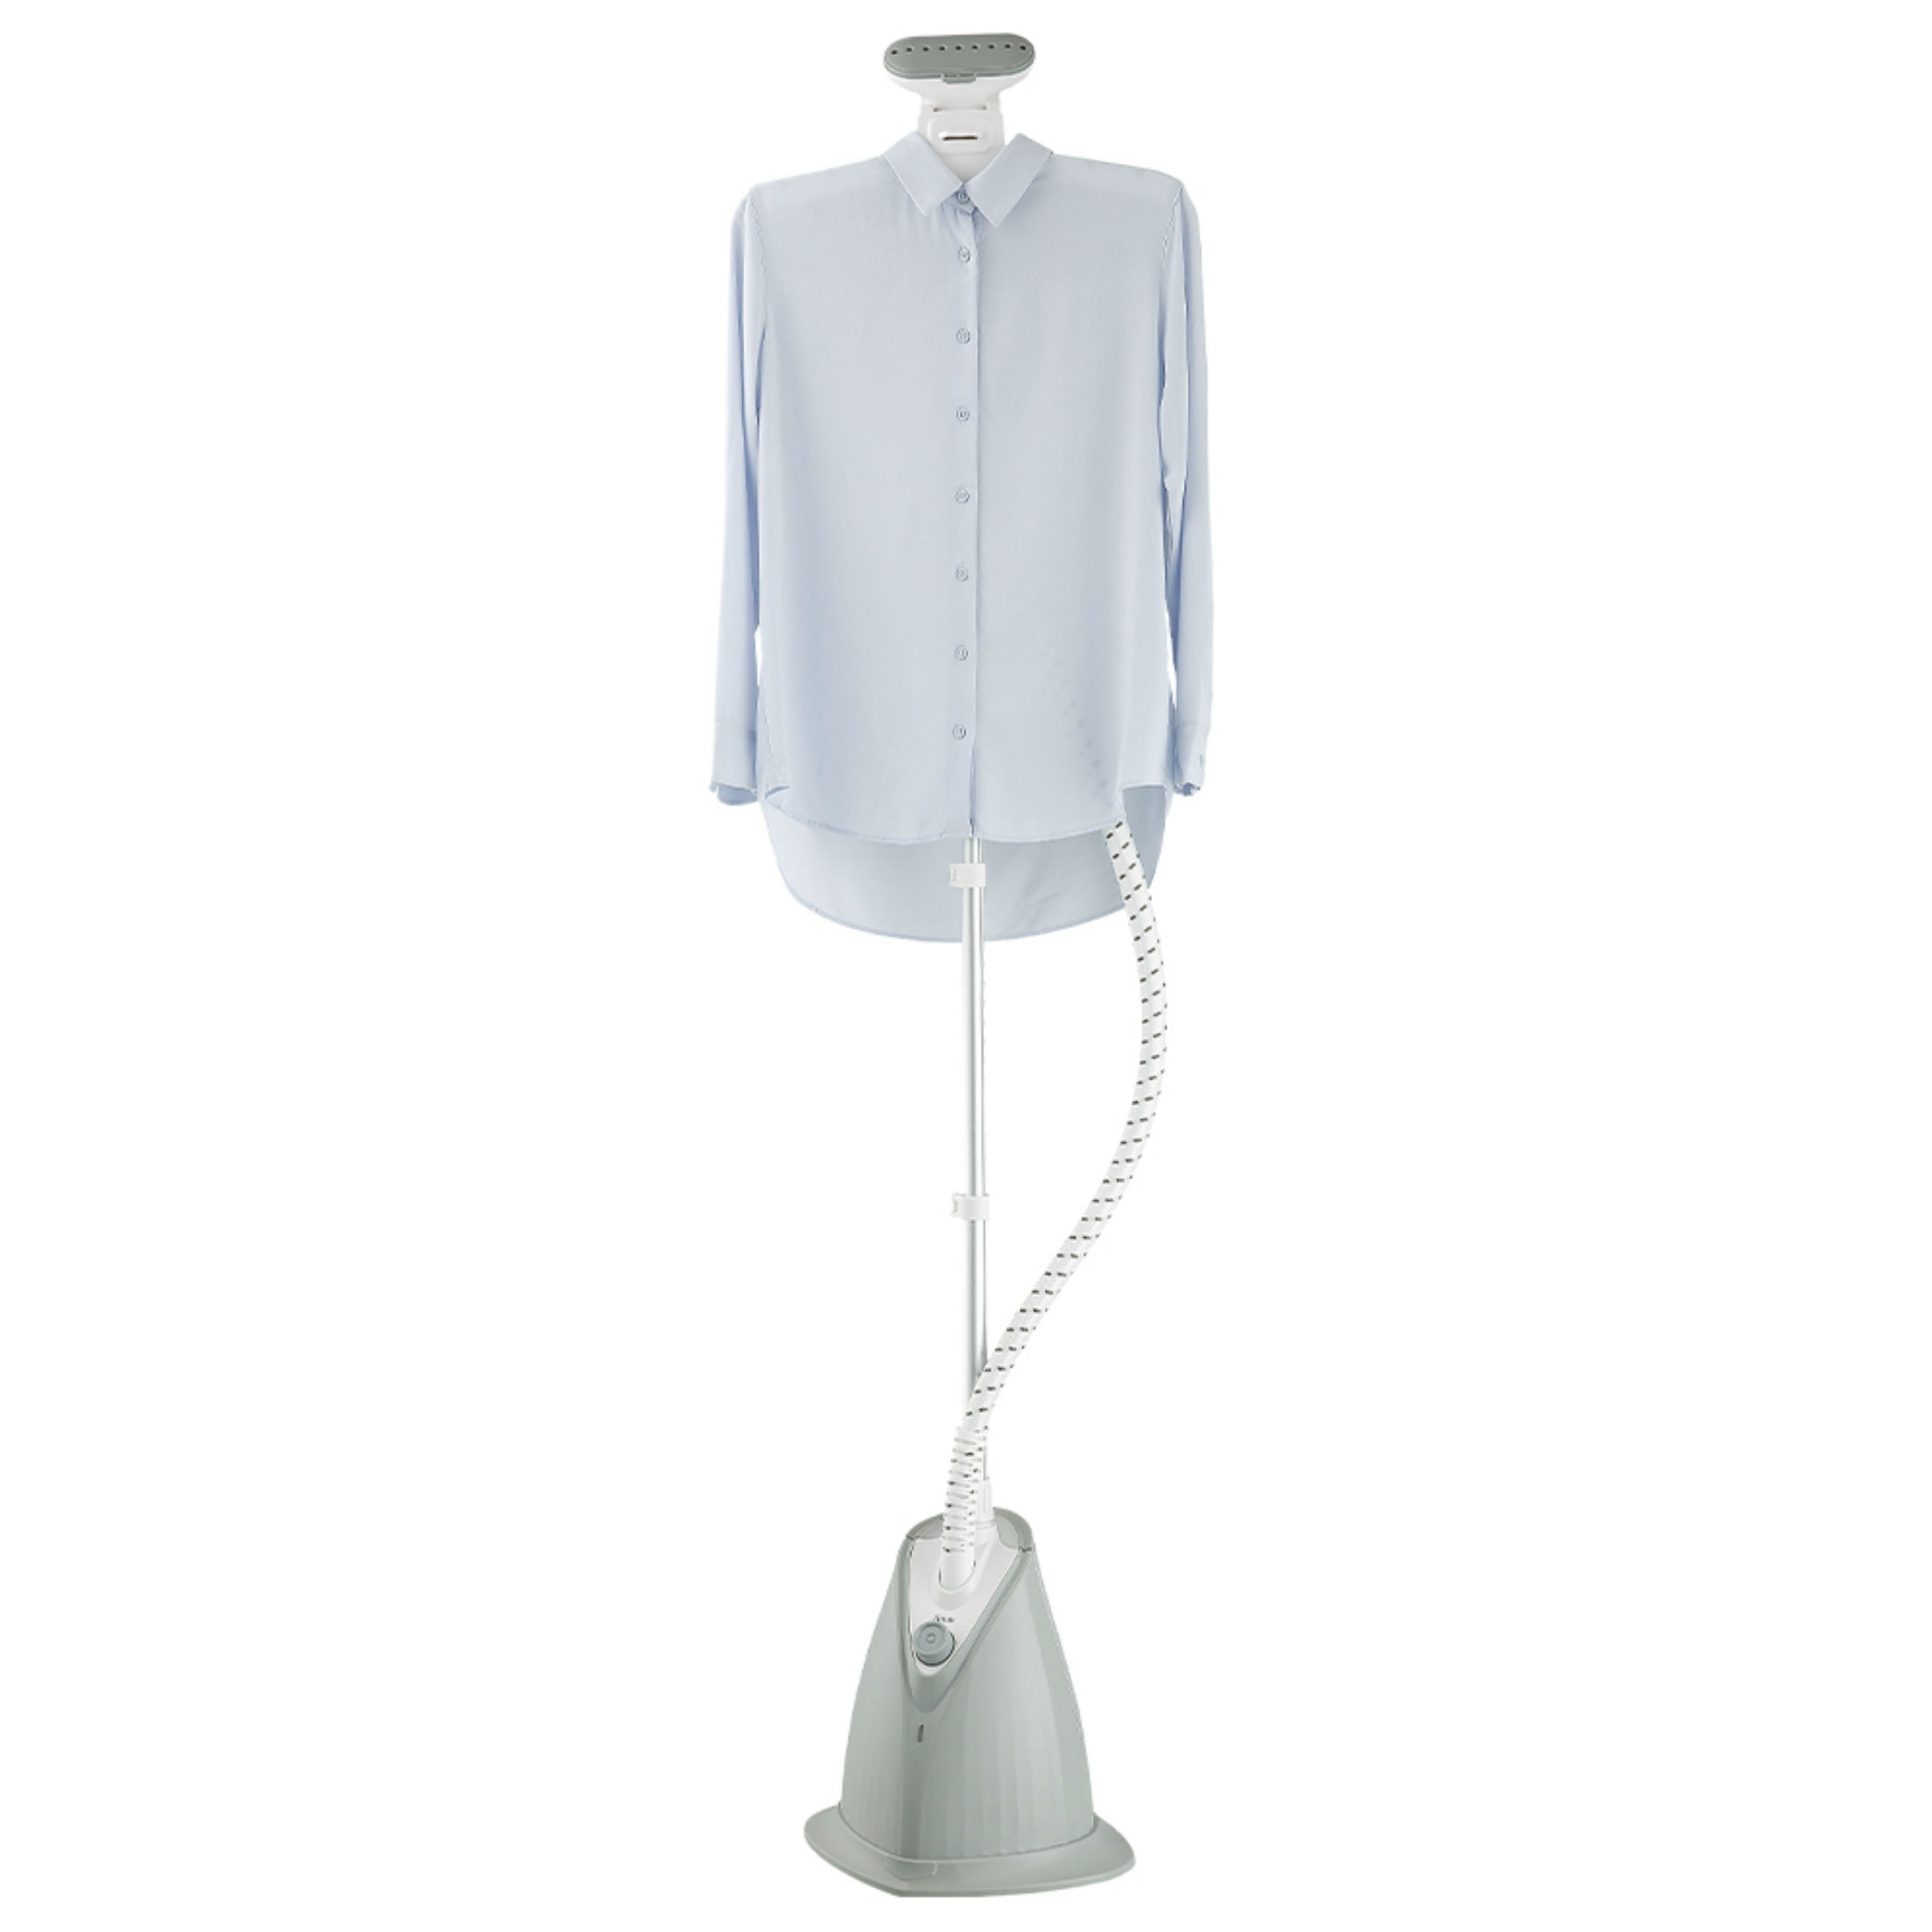 Salav Performance Series Garment Steamer with 360 Swivel Hanger in Gray - image 3 of 11